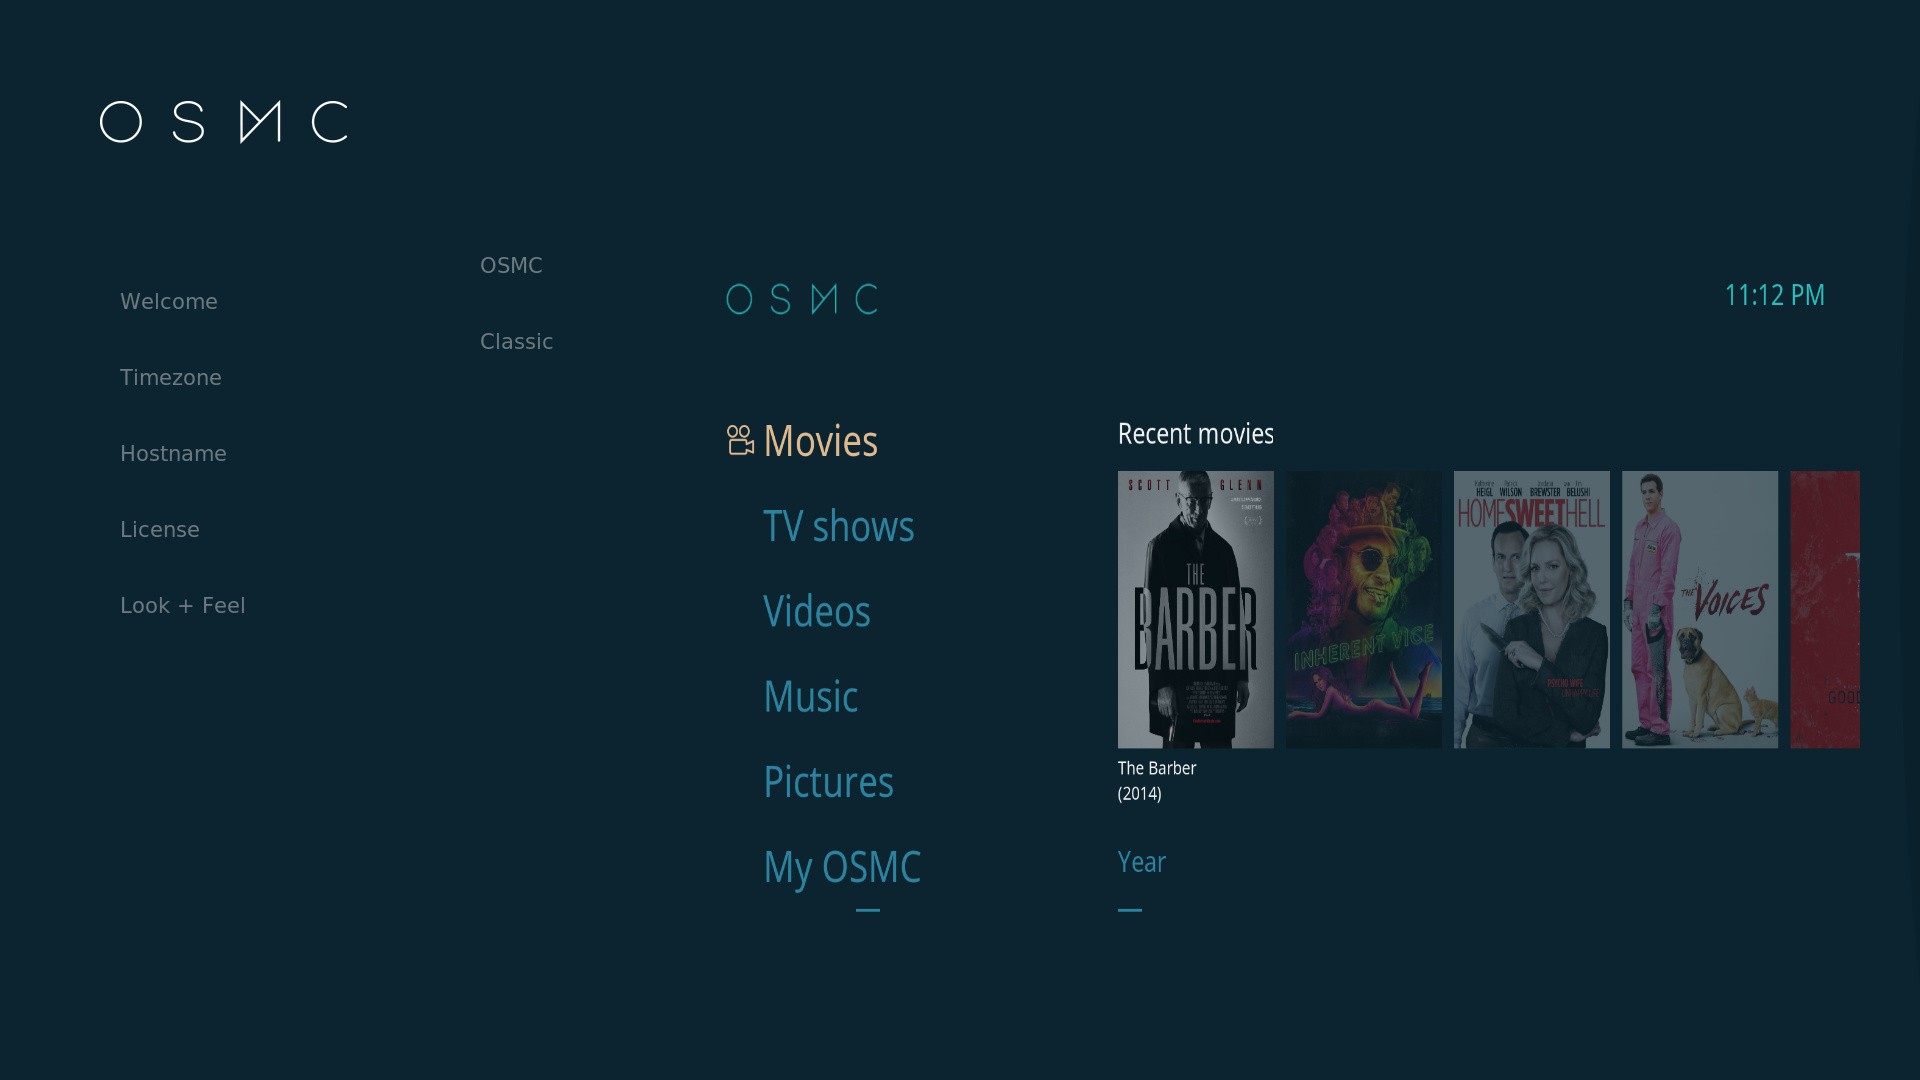 OSMC Linux Media Center Brings Kodi, Debian GNU/Linux 8.5 to